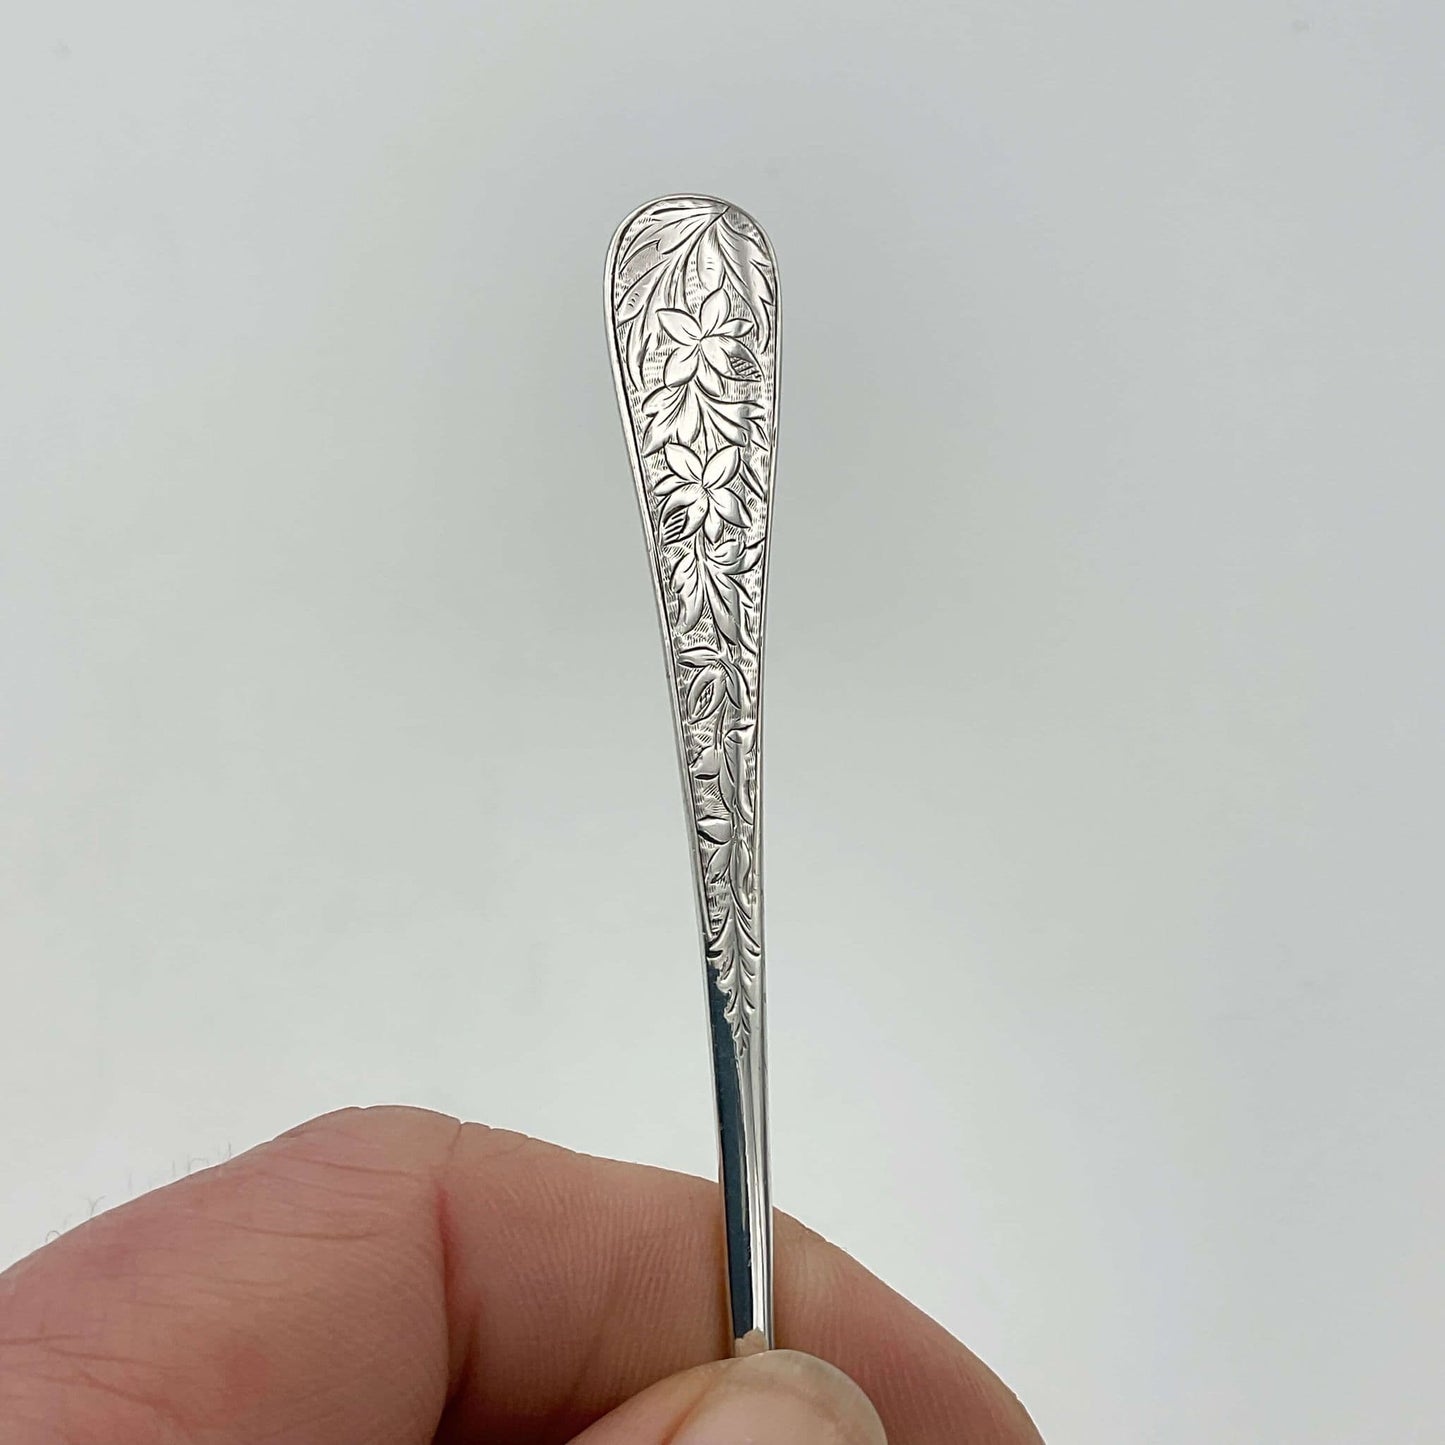 Beautiful engraved flower pattern on handle of spoon